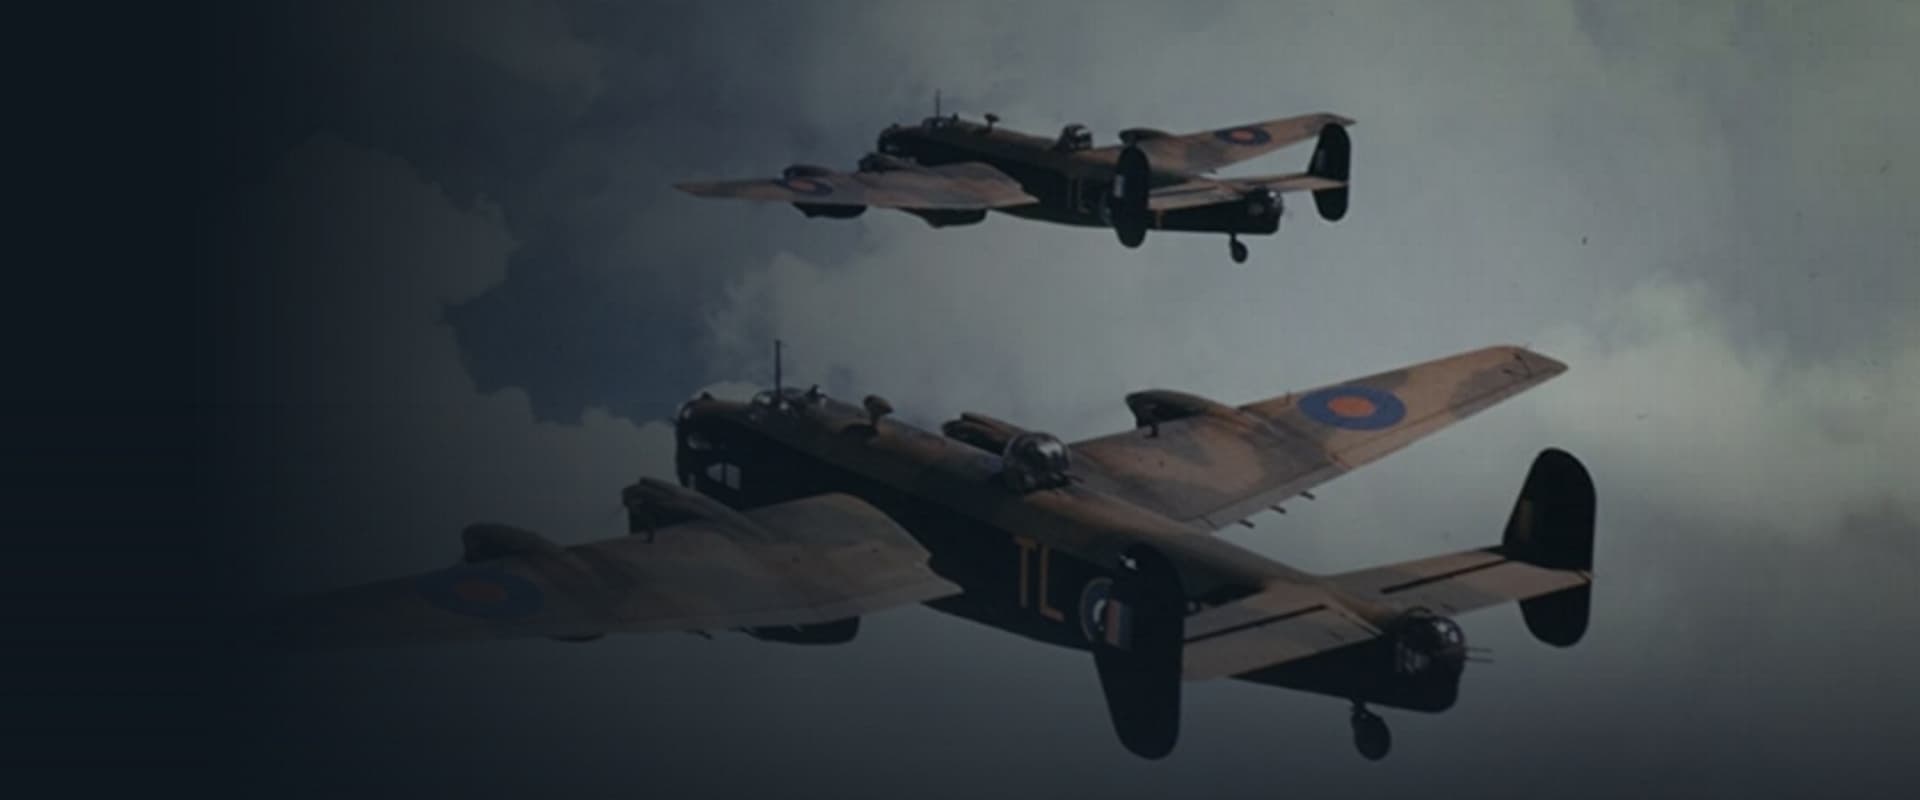 Halifax At War: Story of a Bomber